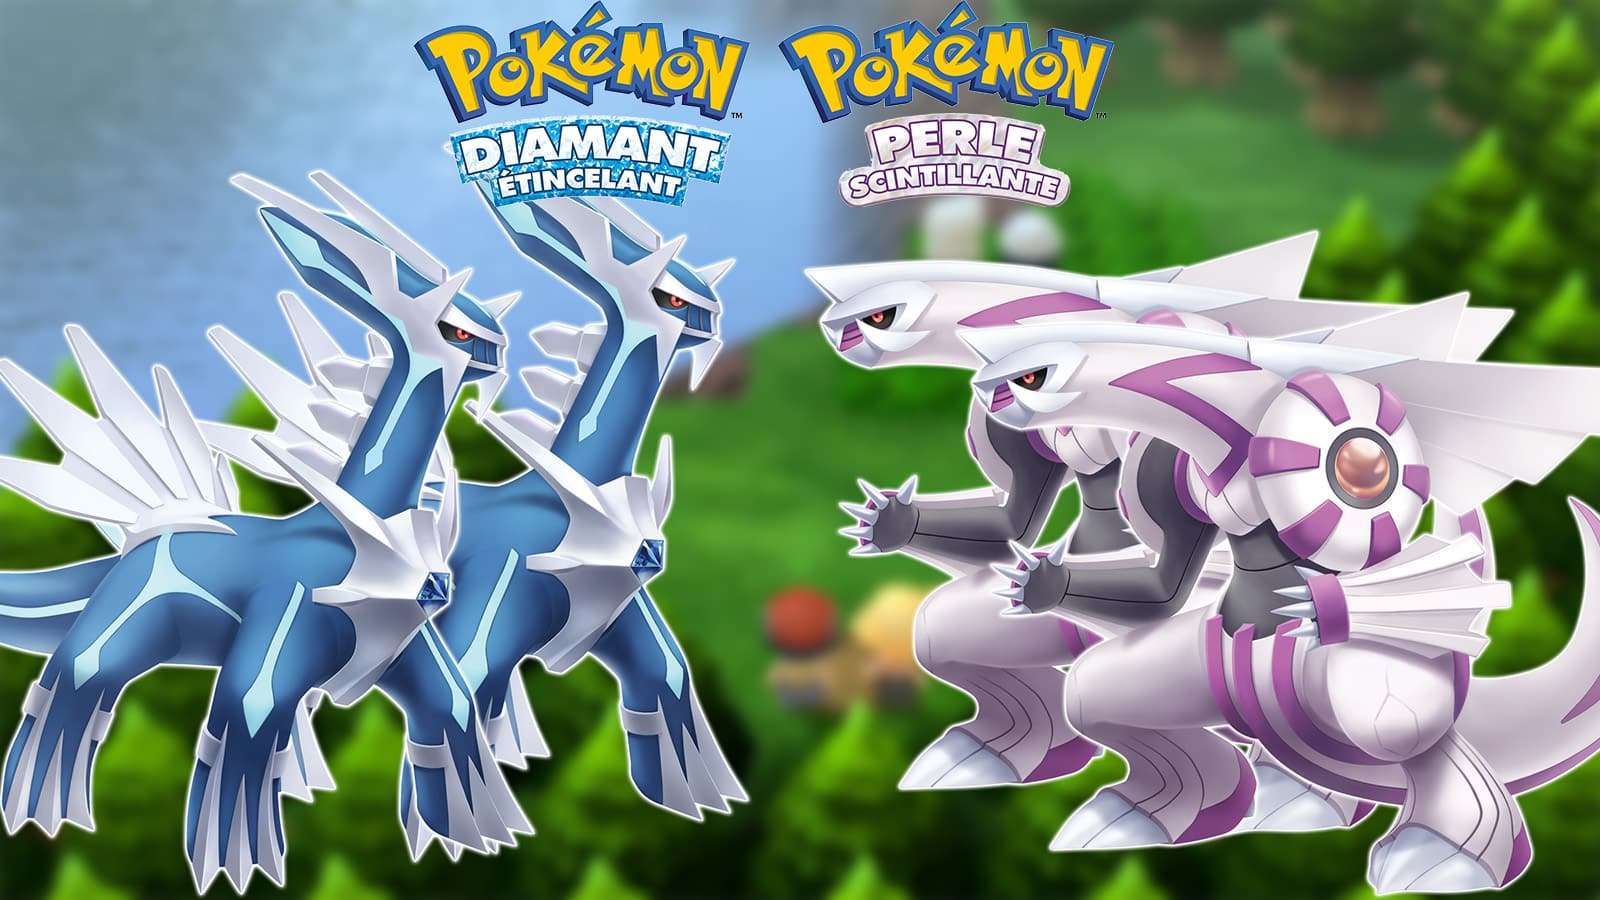 Pokémon Diamant perle glitch clonage Palkia Dialga